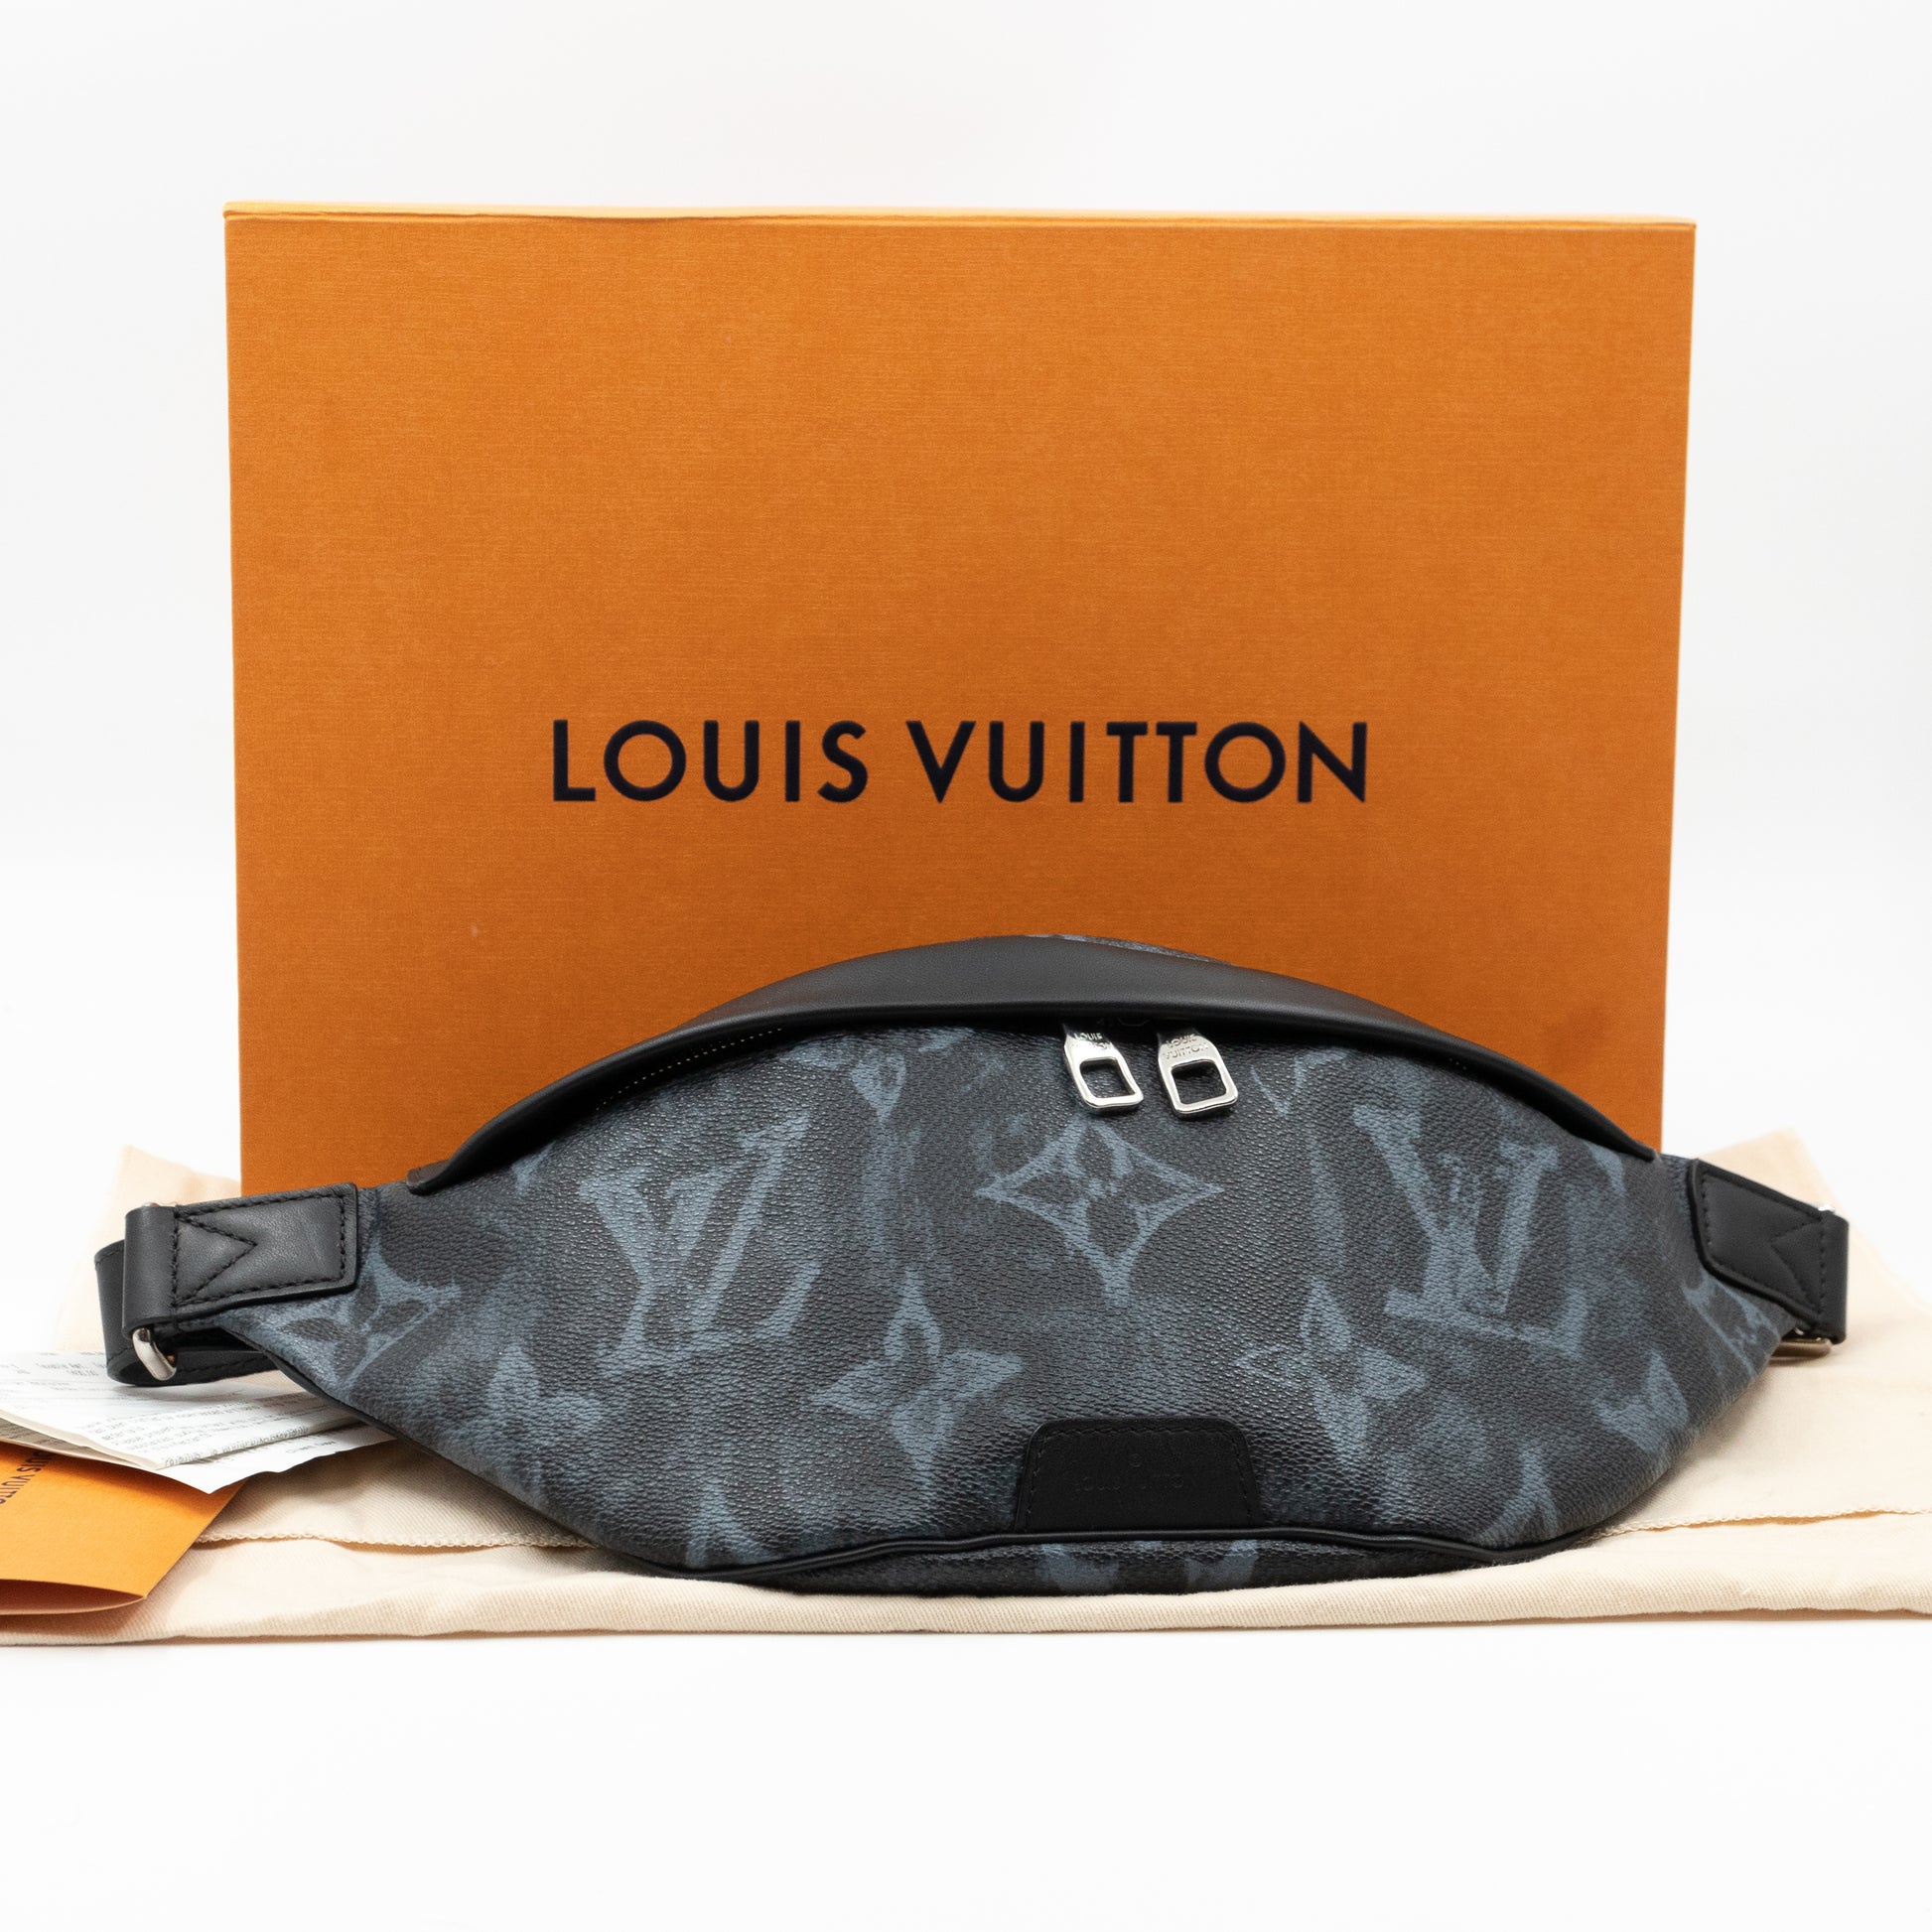 Shop Louis Vuitton Louis Vuitton DISCOVERY BUMBAG by Bellaris